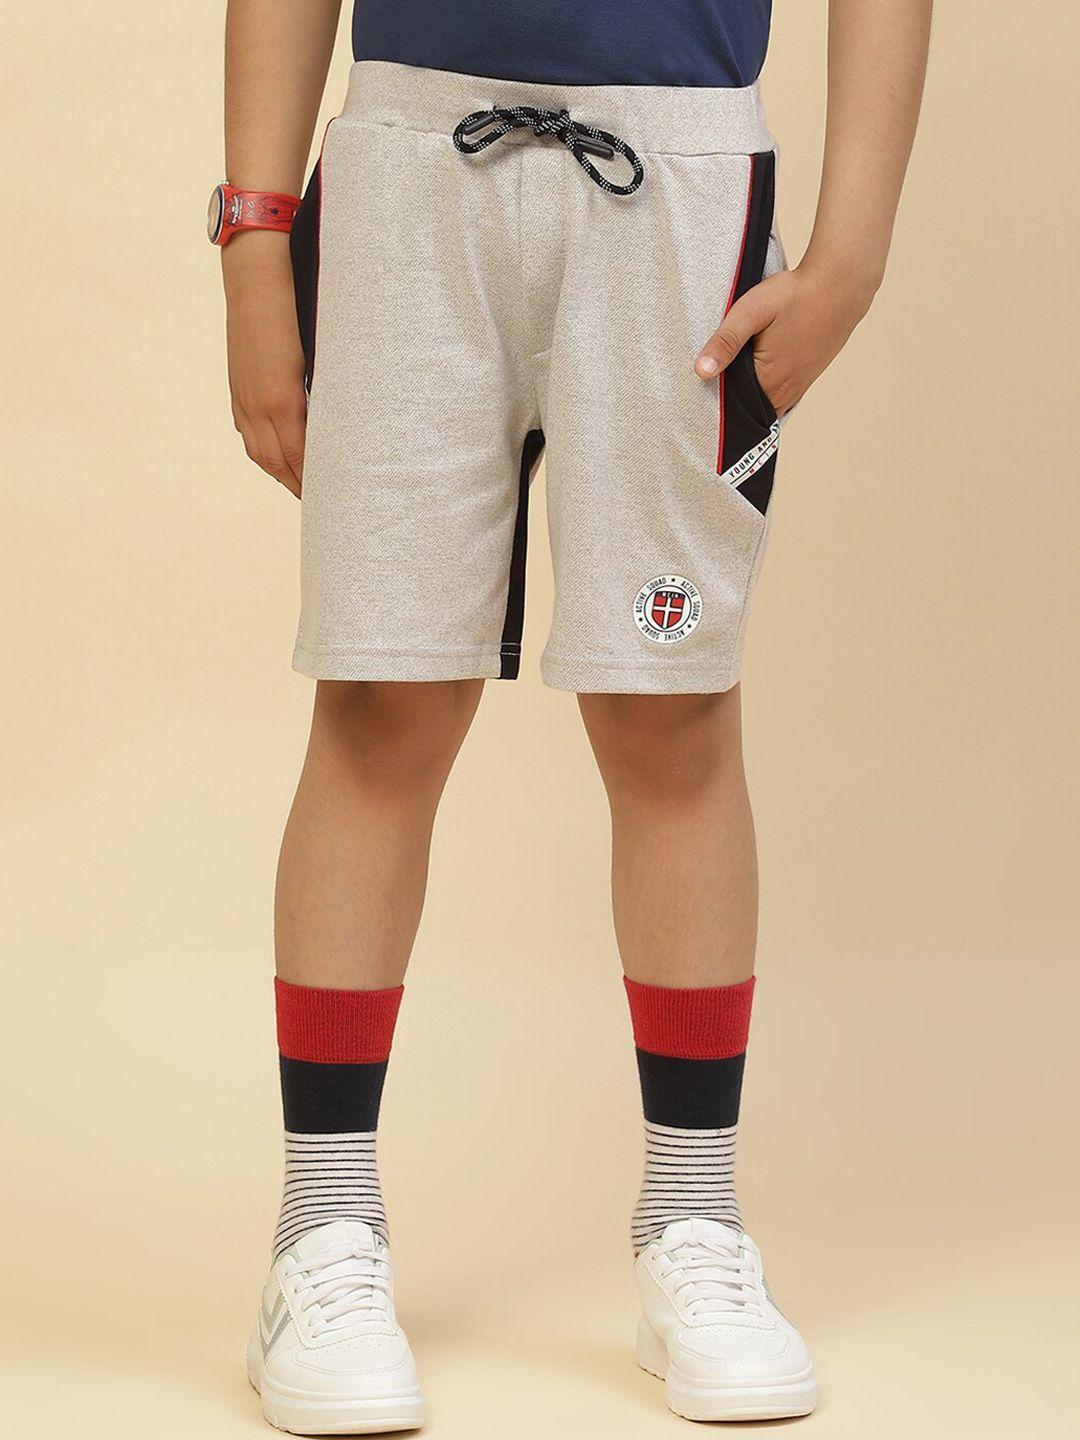 monte-carlo-boys-mid-rise-sports-shorts